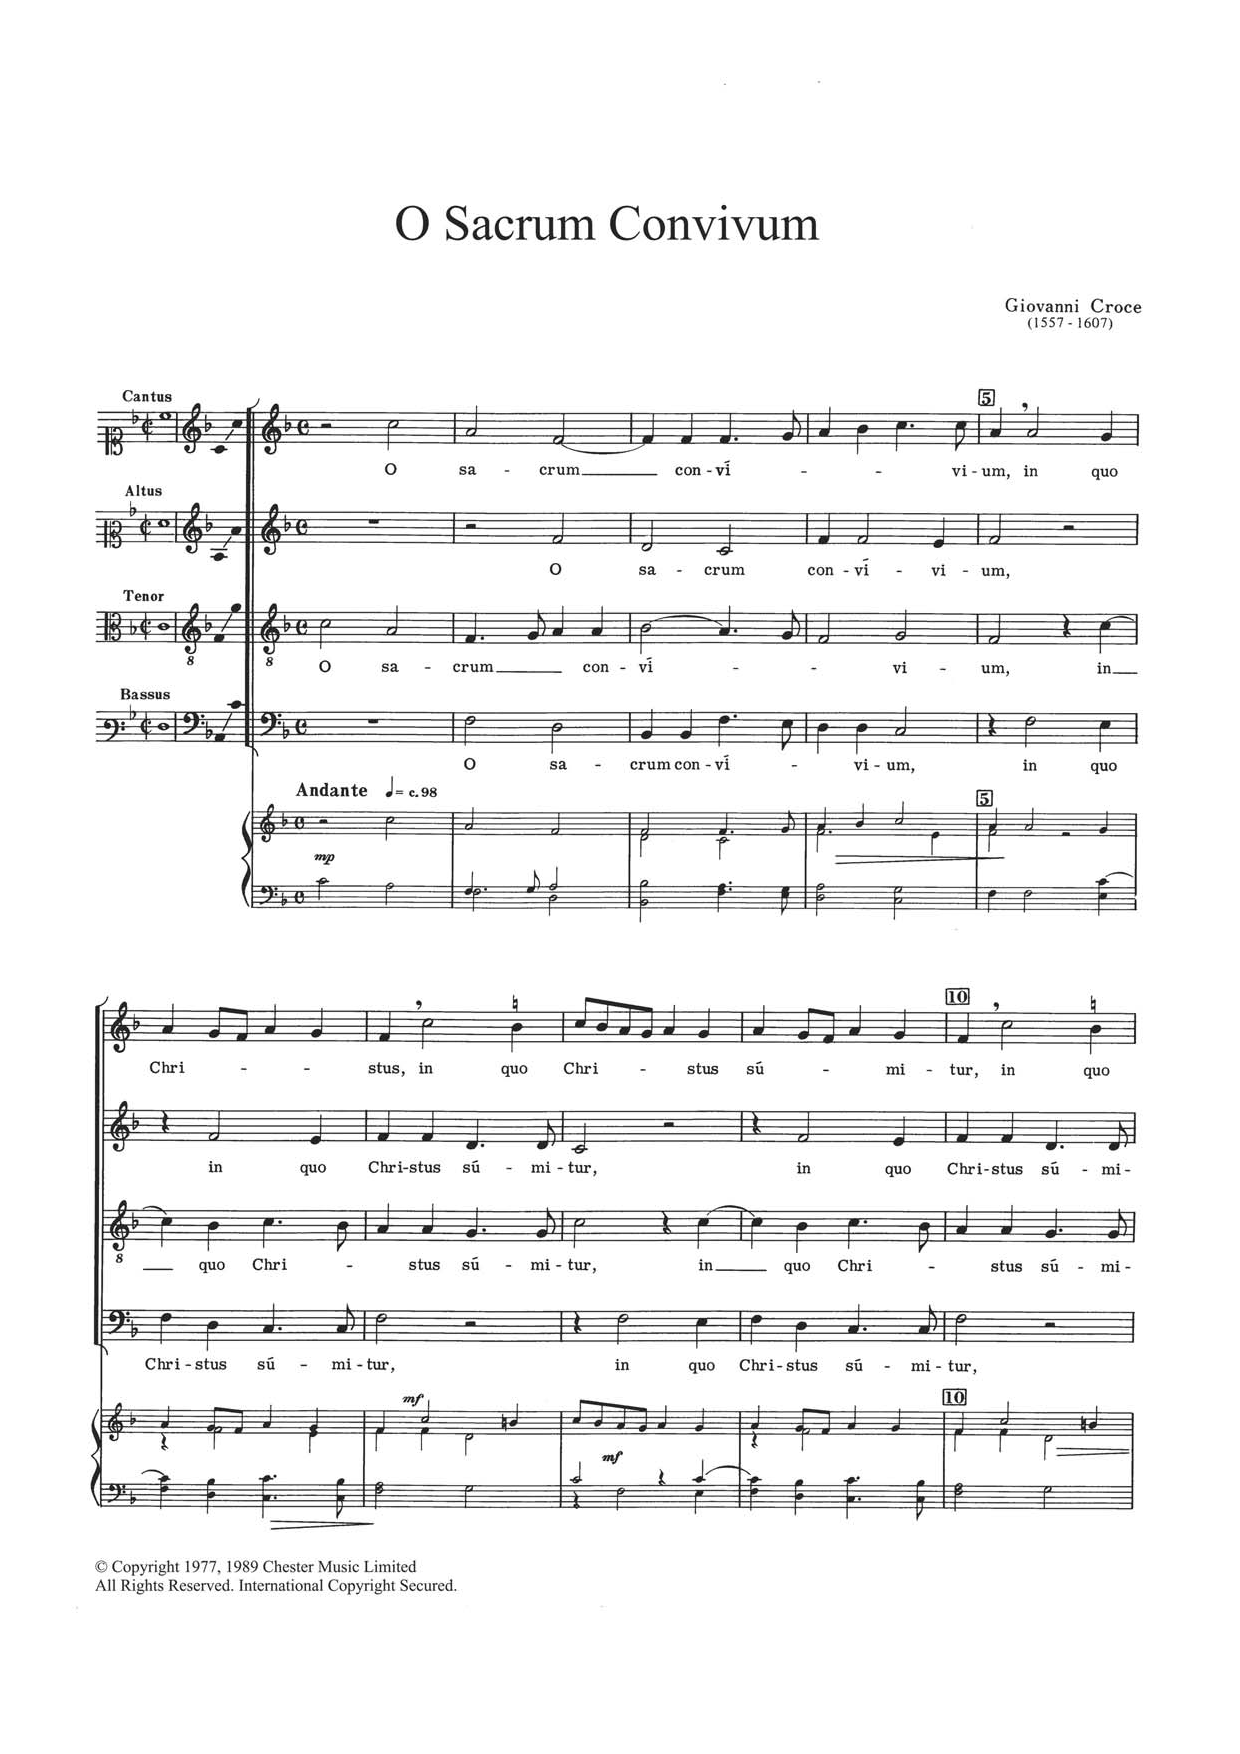 Giovanni Croce O Sacrum Convivium Sheet Music Notes & Chords for Choir - Download or Print PDF